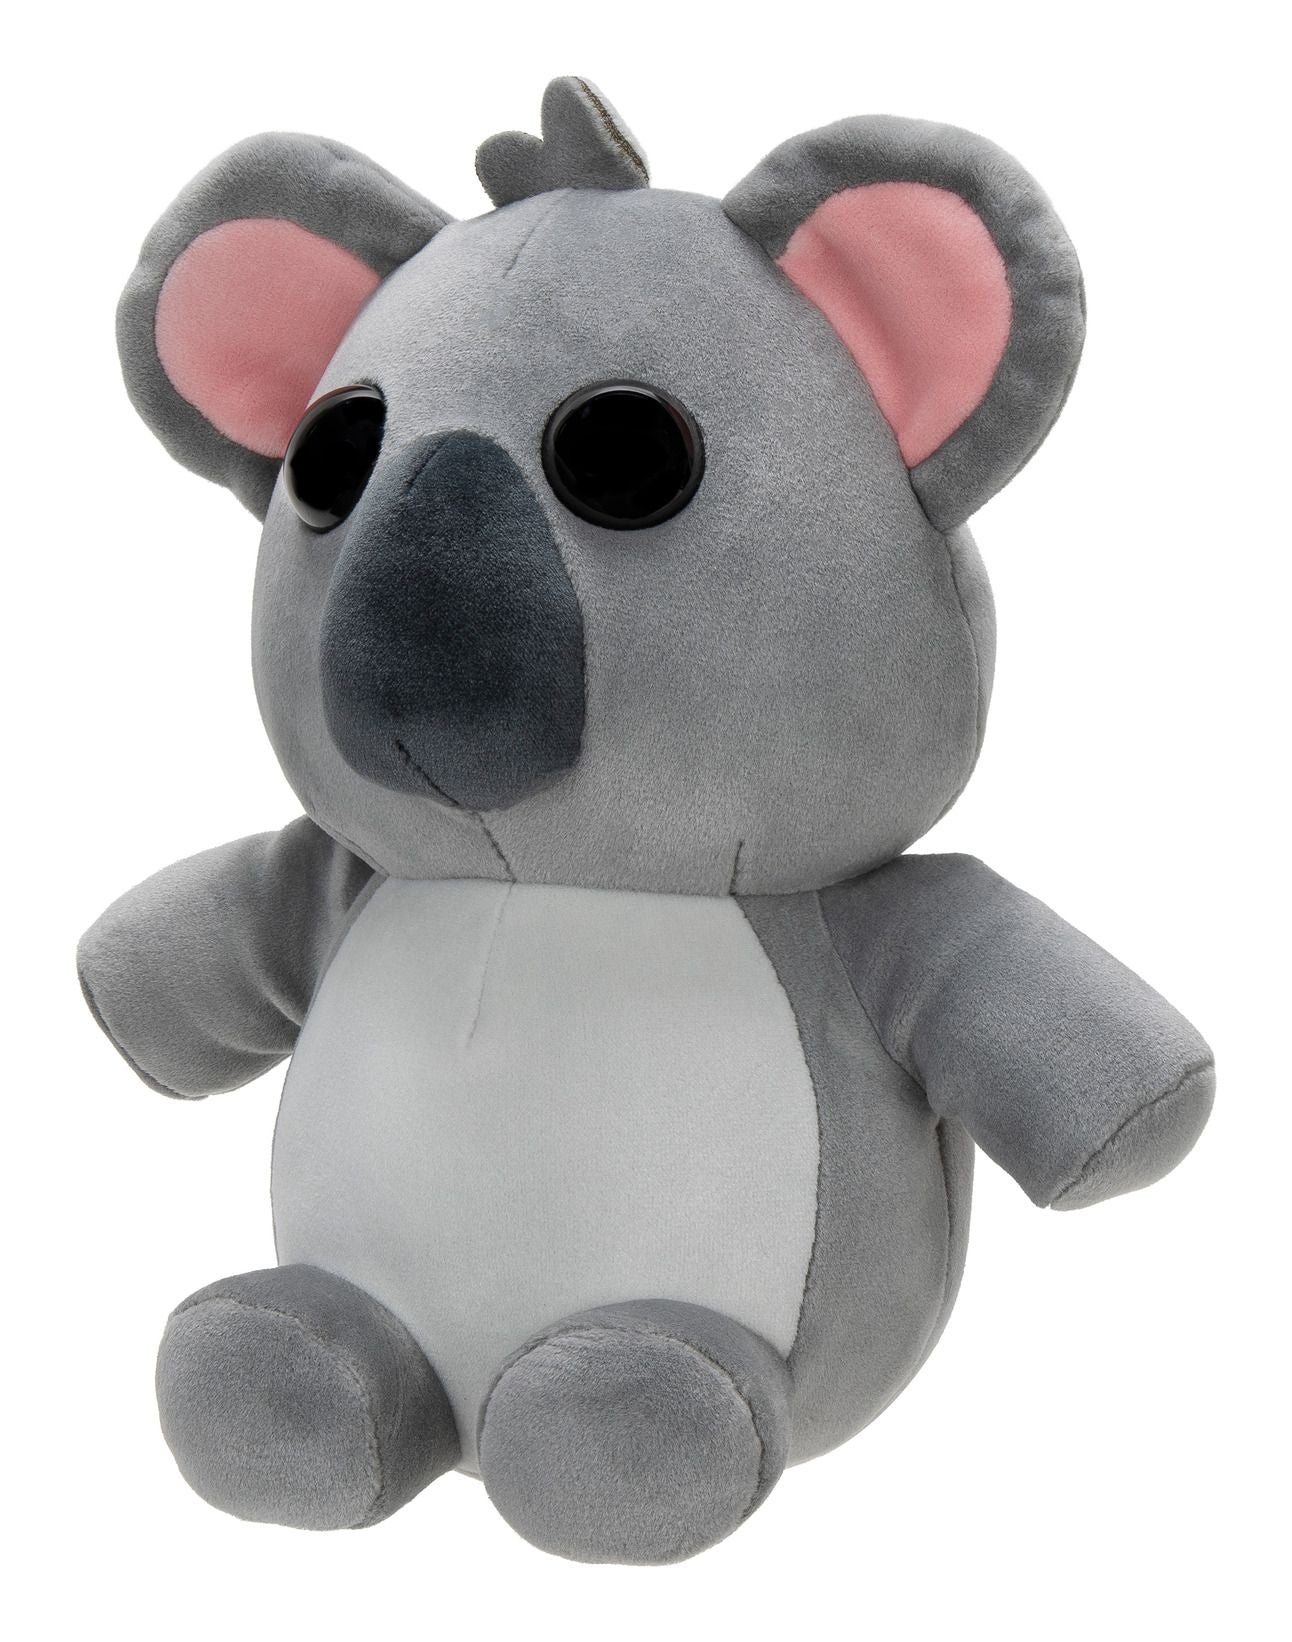 Adopt Me Series 3 Koala 8 Inch Collector Plush Soft Toy